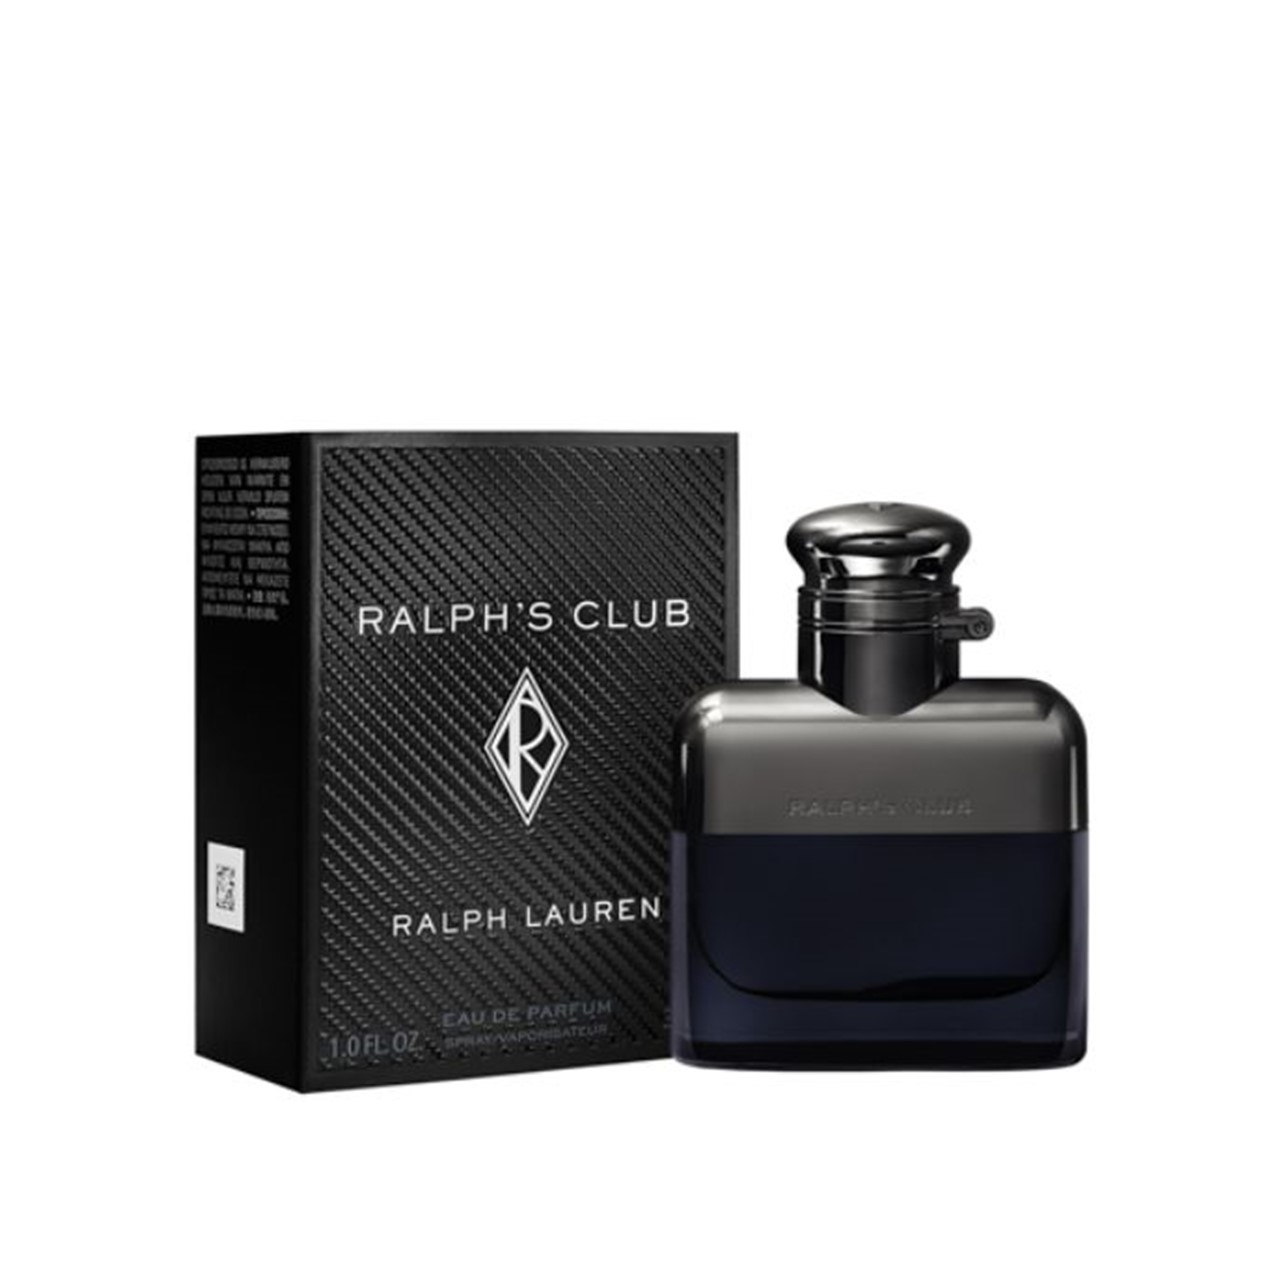 Ralph Lauren Ralph's Club Eau de Parfum For Men 30ml